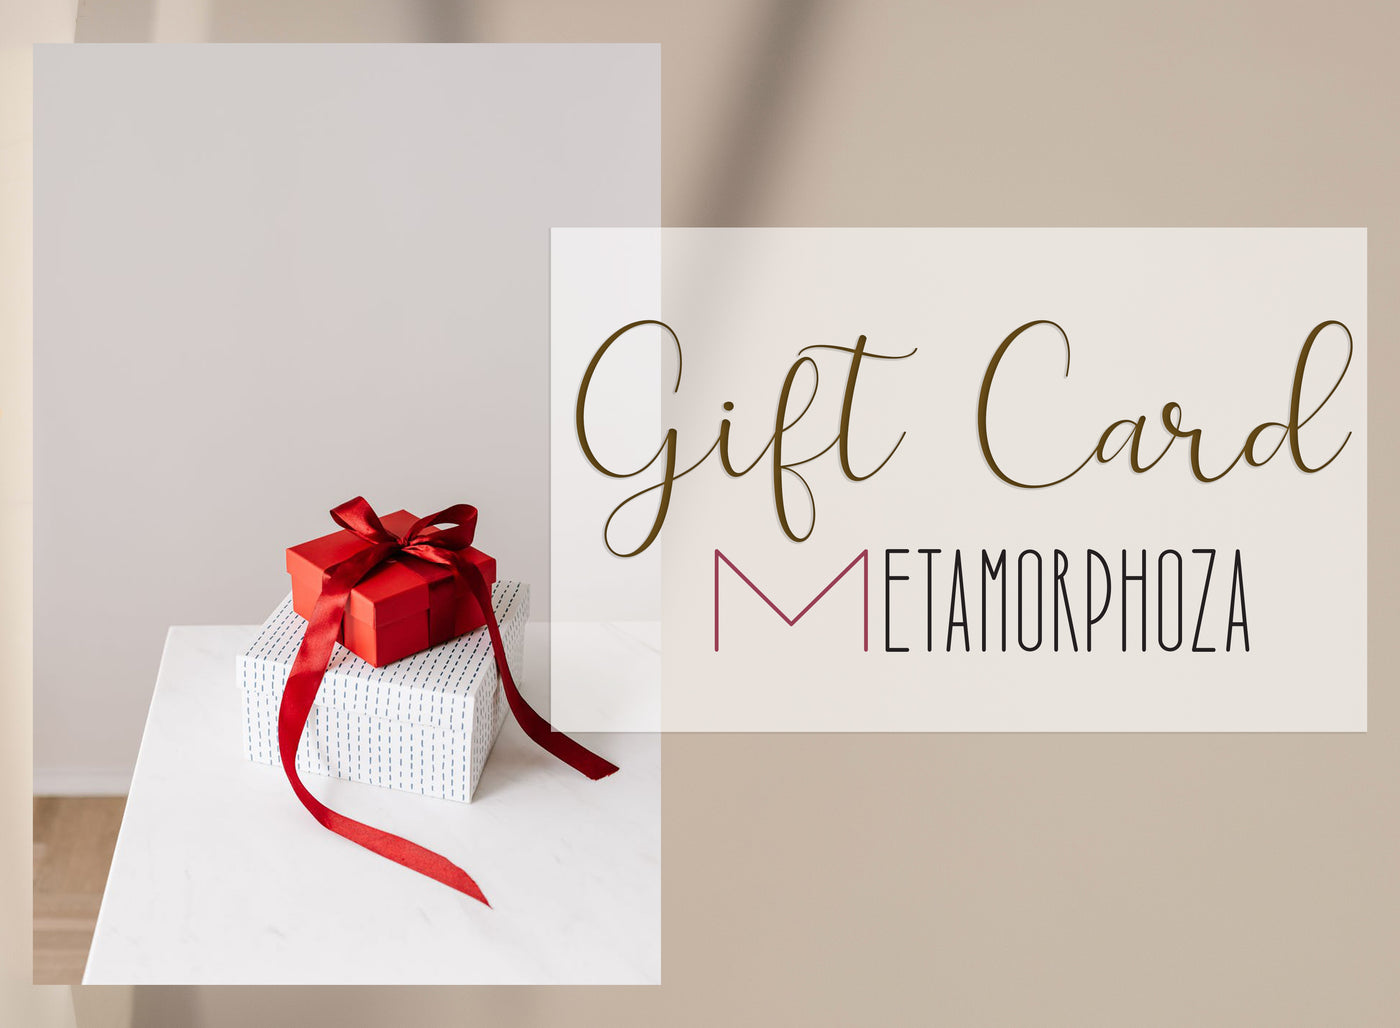 Metamorphoza Gift Card